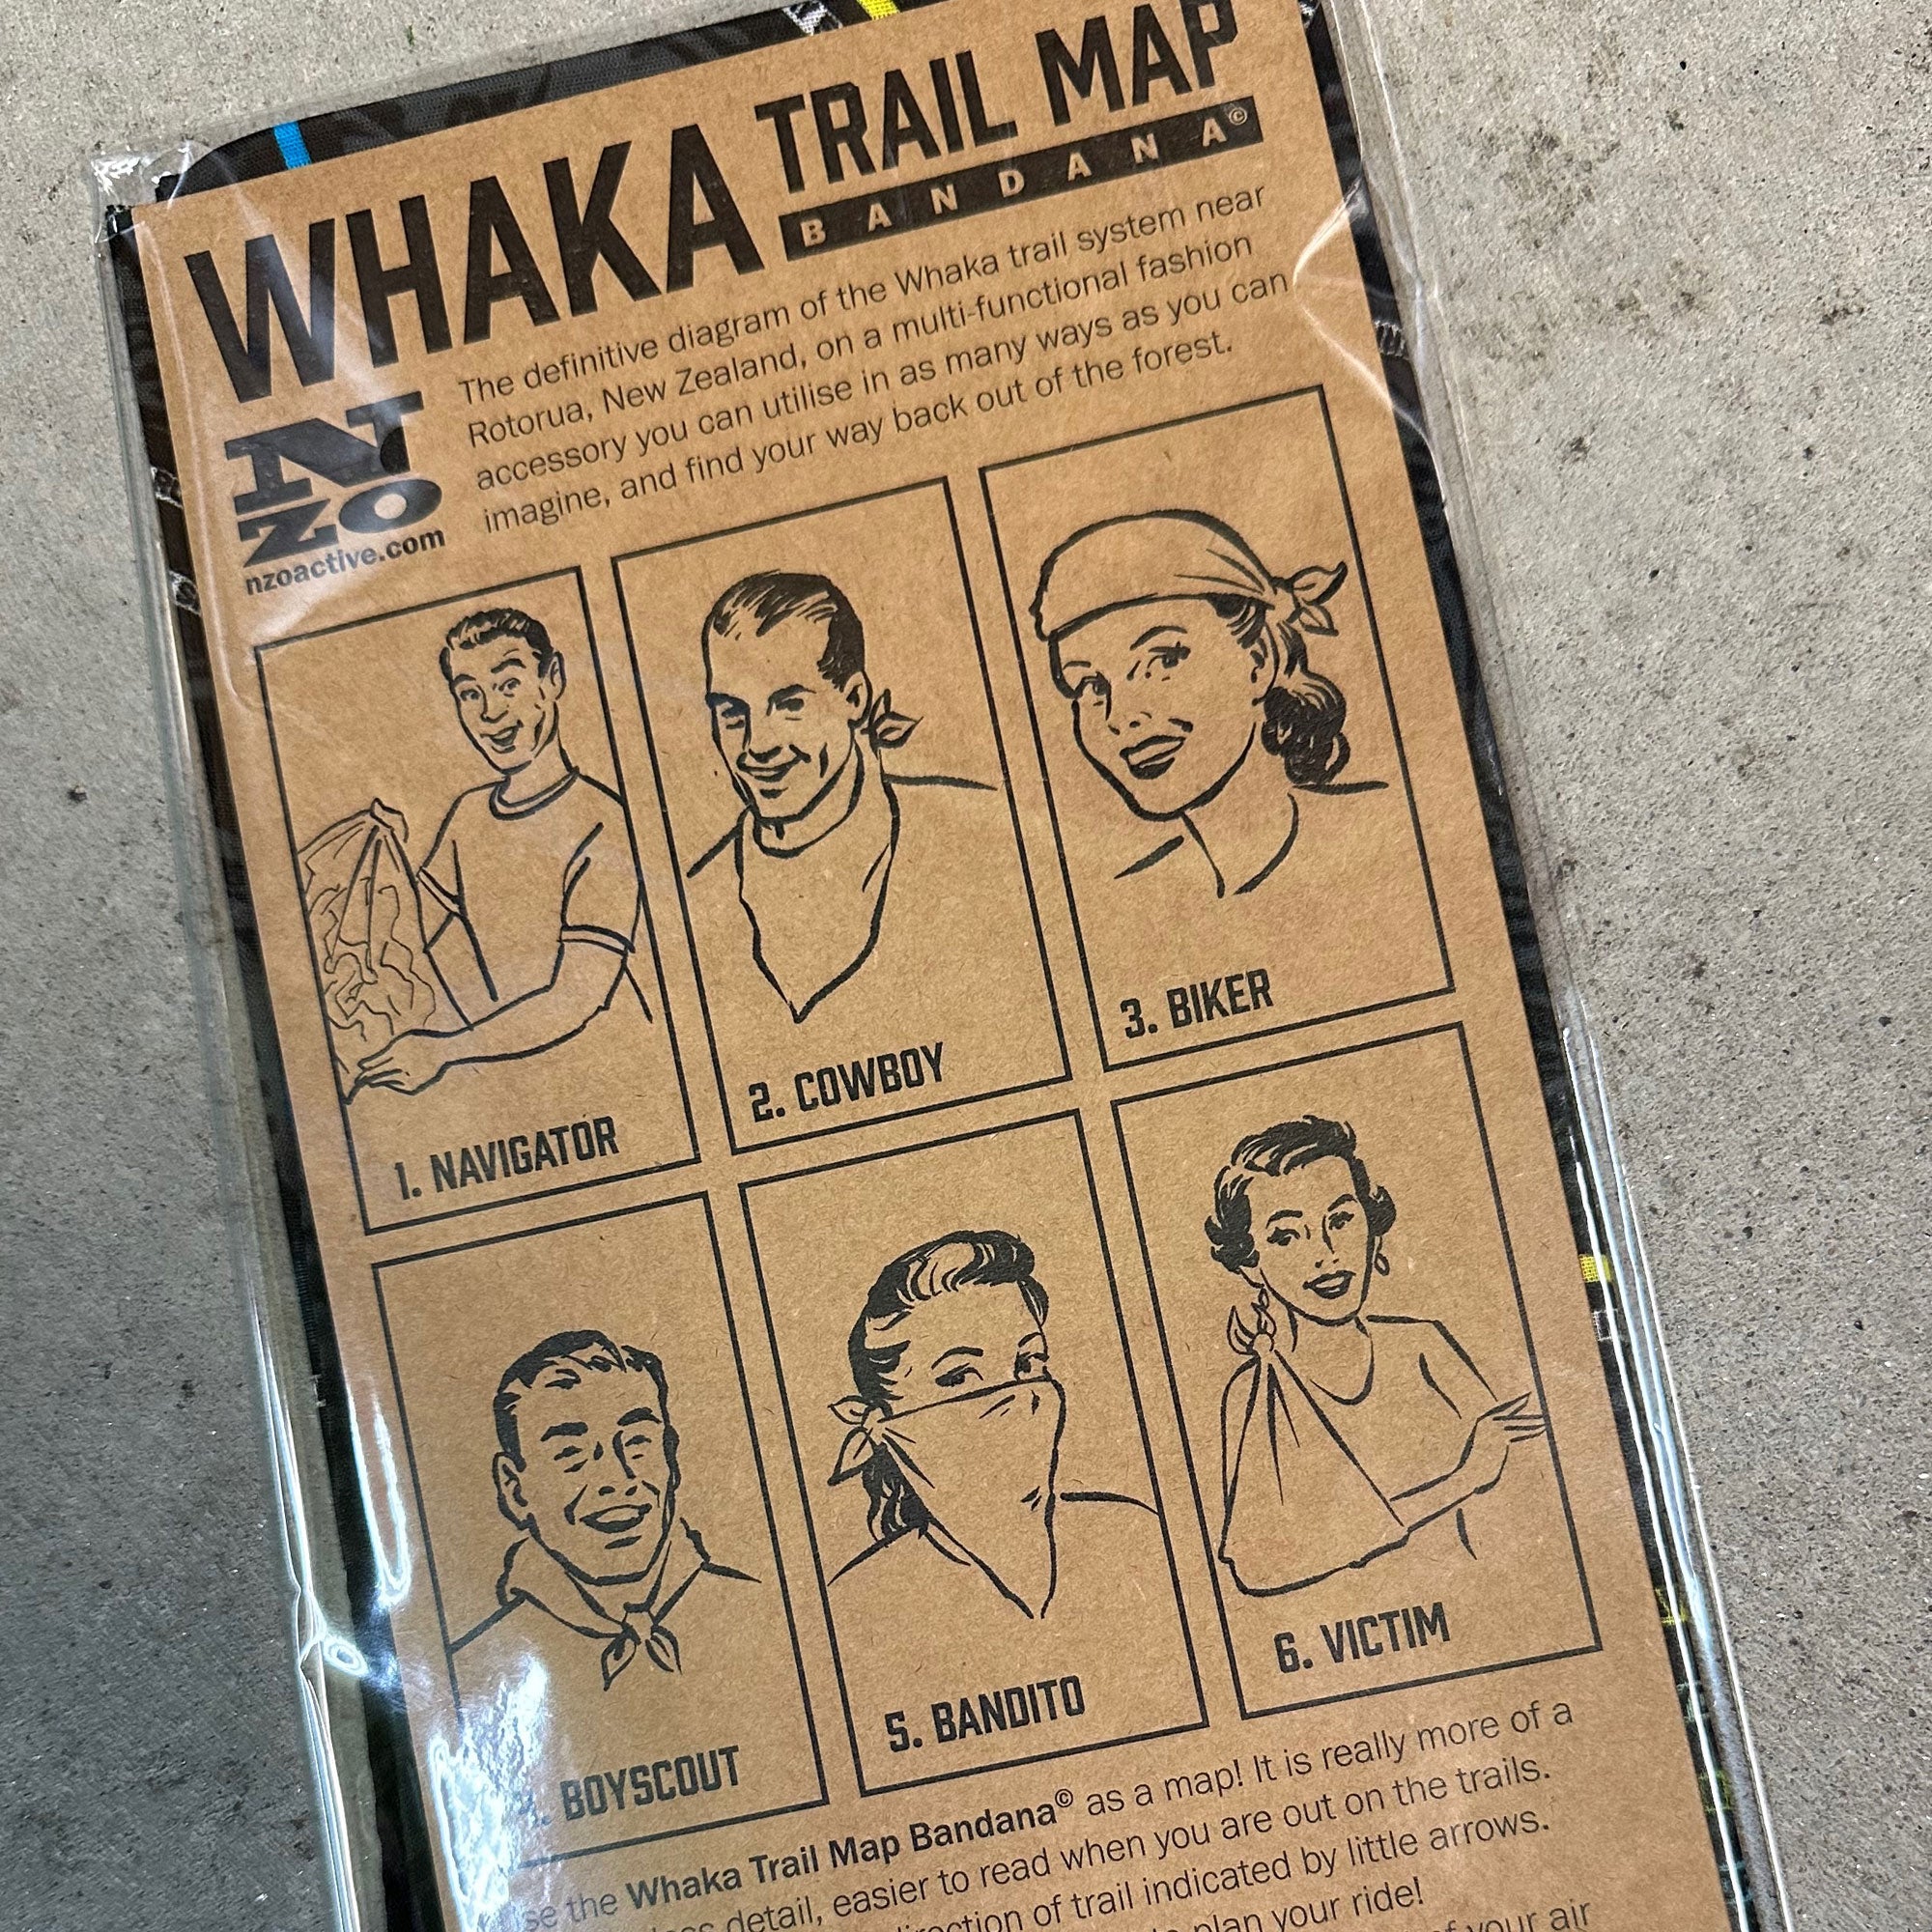 Whaka Trail Map Bandana